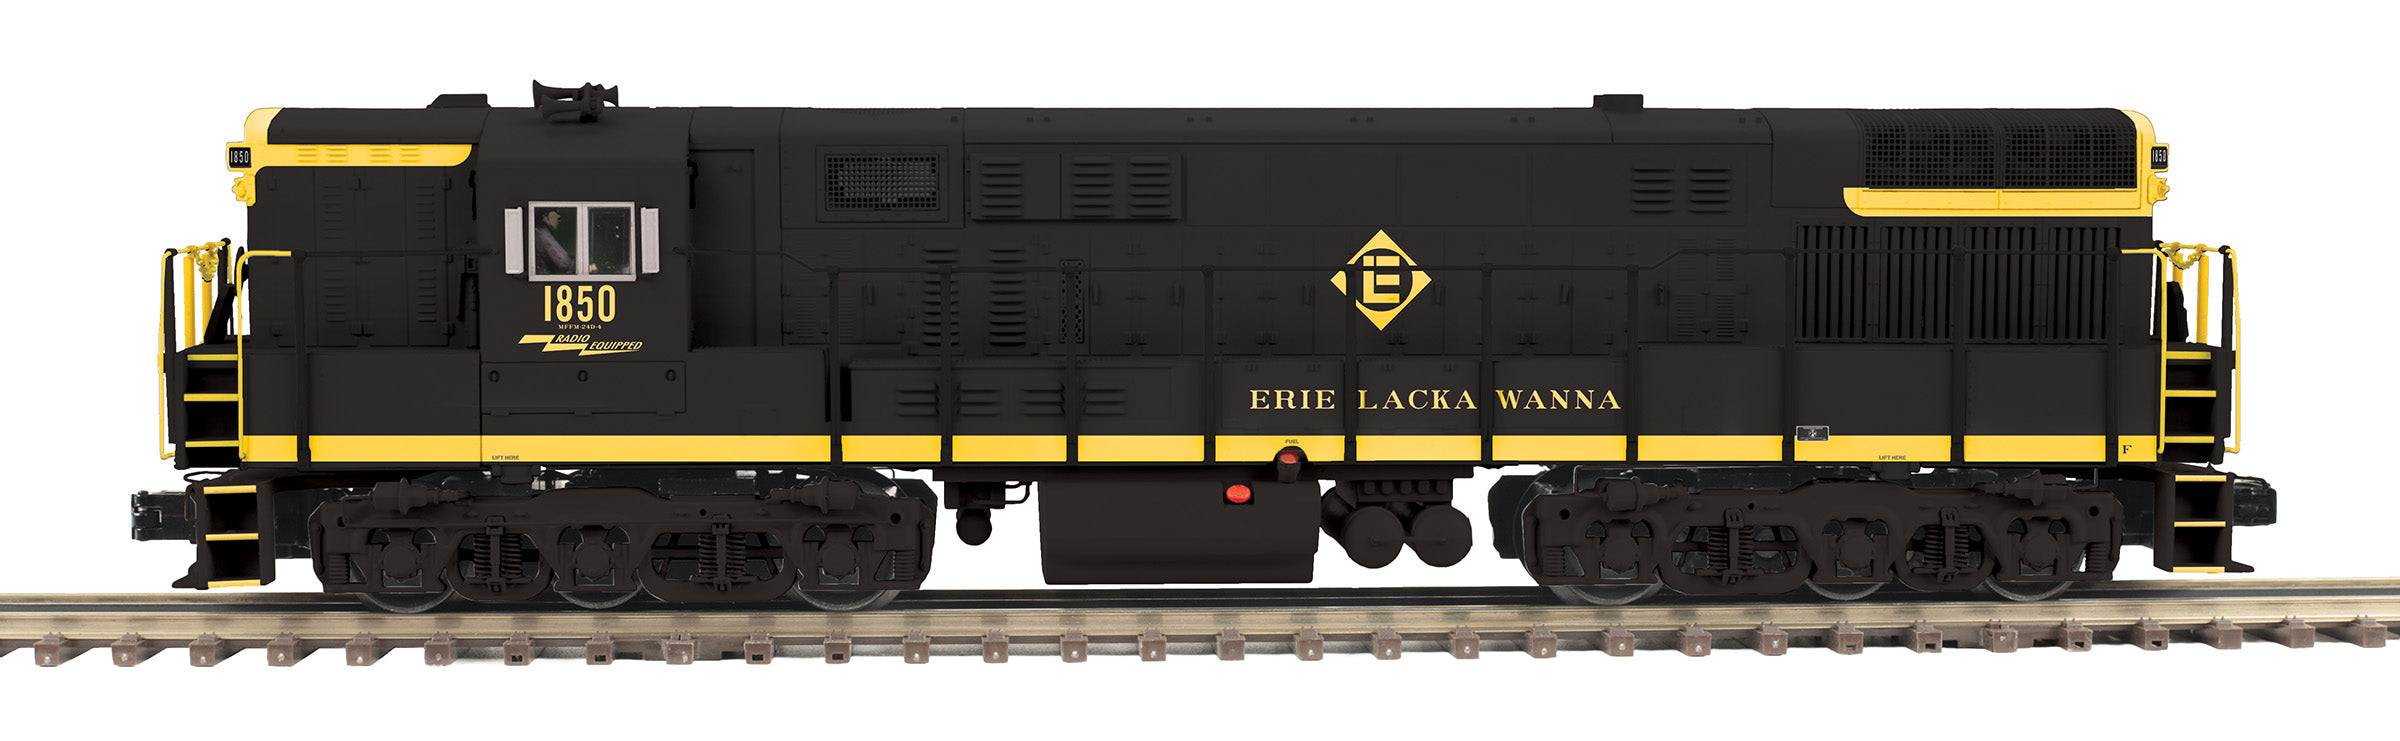 MTH 20-21683-1 - FM Train Master Diesel Engine "Erie Lackawanna" (Black) #1850 w/ PS3 (Hi-Rail Wheels) - Custom Run for MrMuffin'sTrains